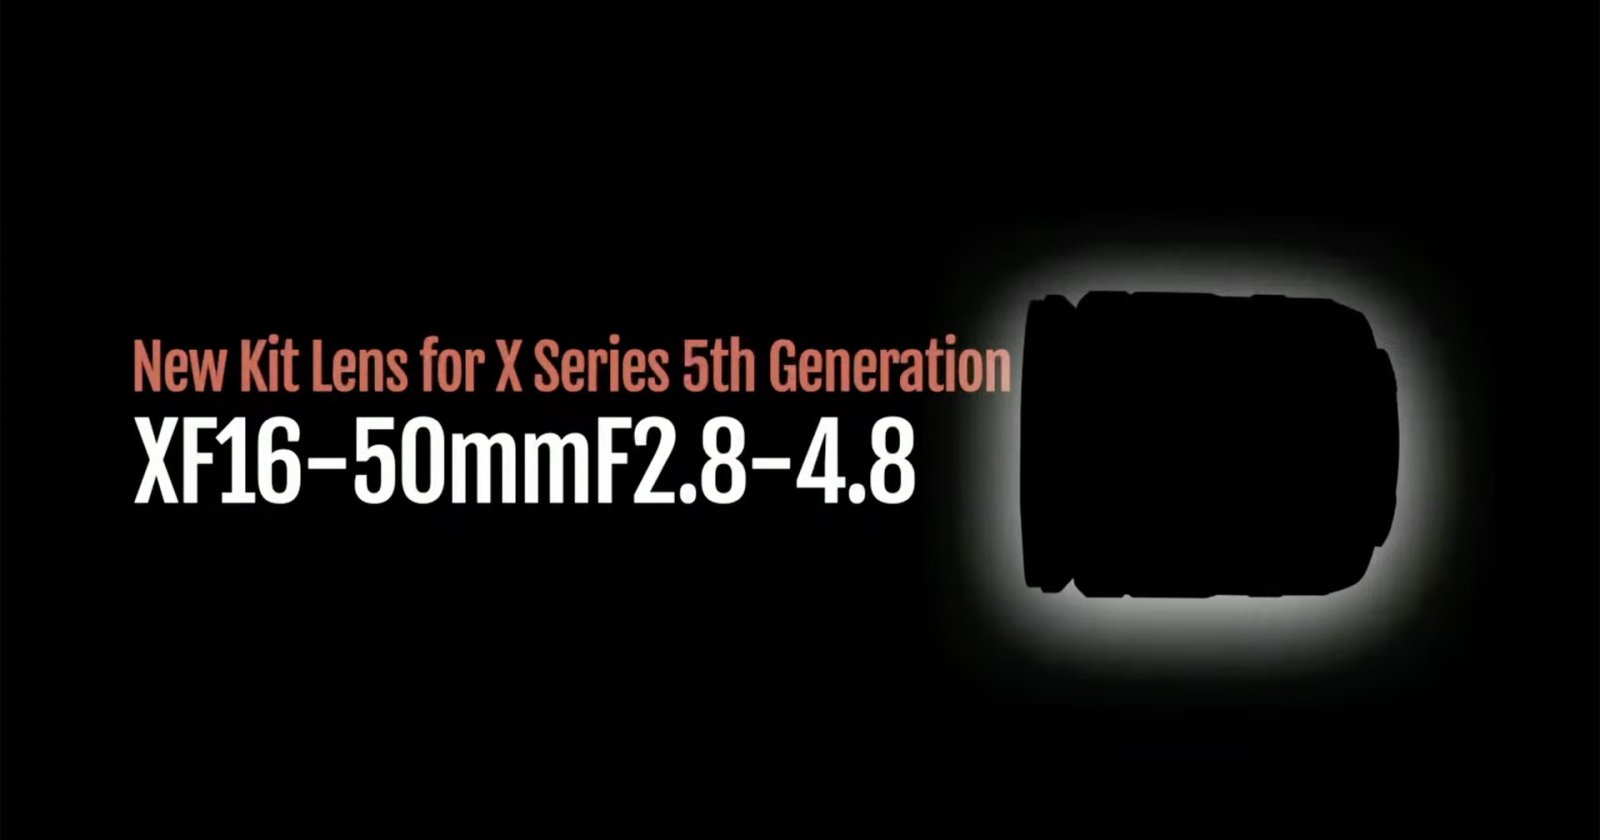 FUJIFILM เตรียมเปิดตัวเลนส์ Kit รุ่นใหม่ XF 16-50mm F2.8-4.8